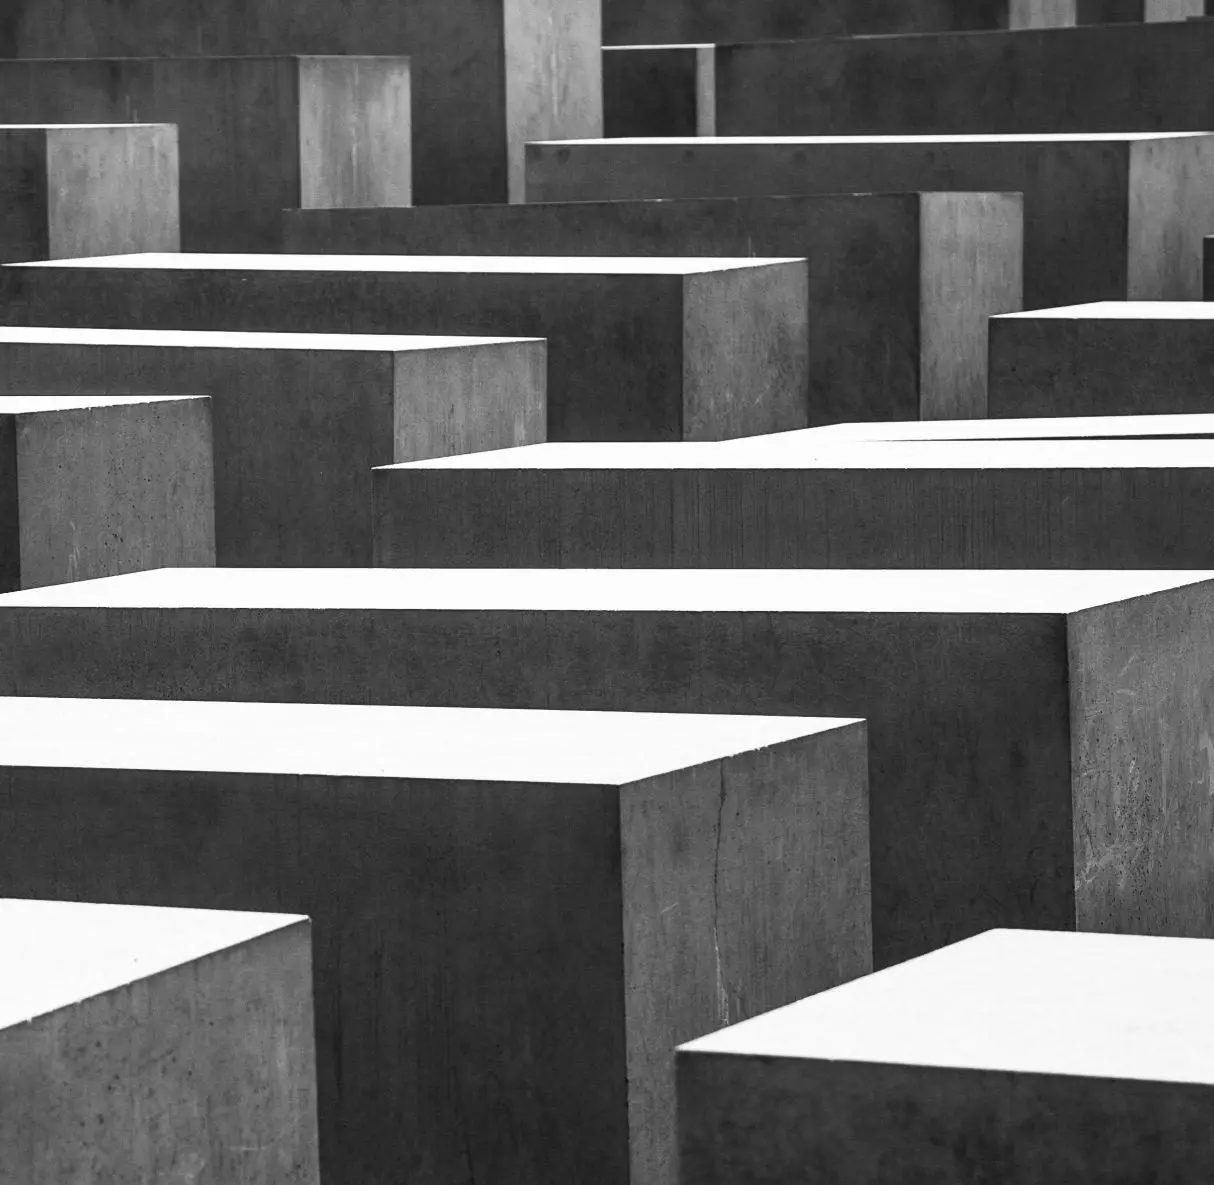 Patterned photo of World War 2 memorial graves in Berlin